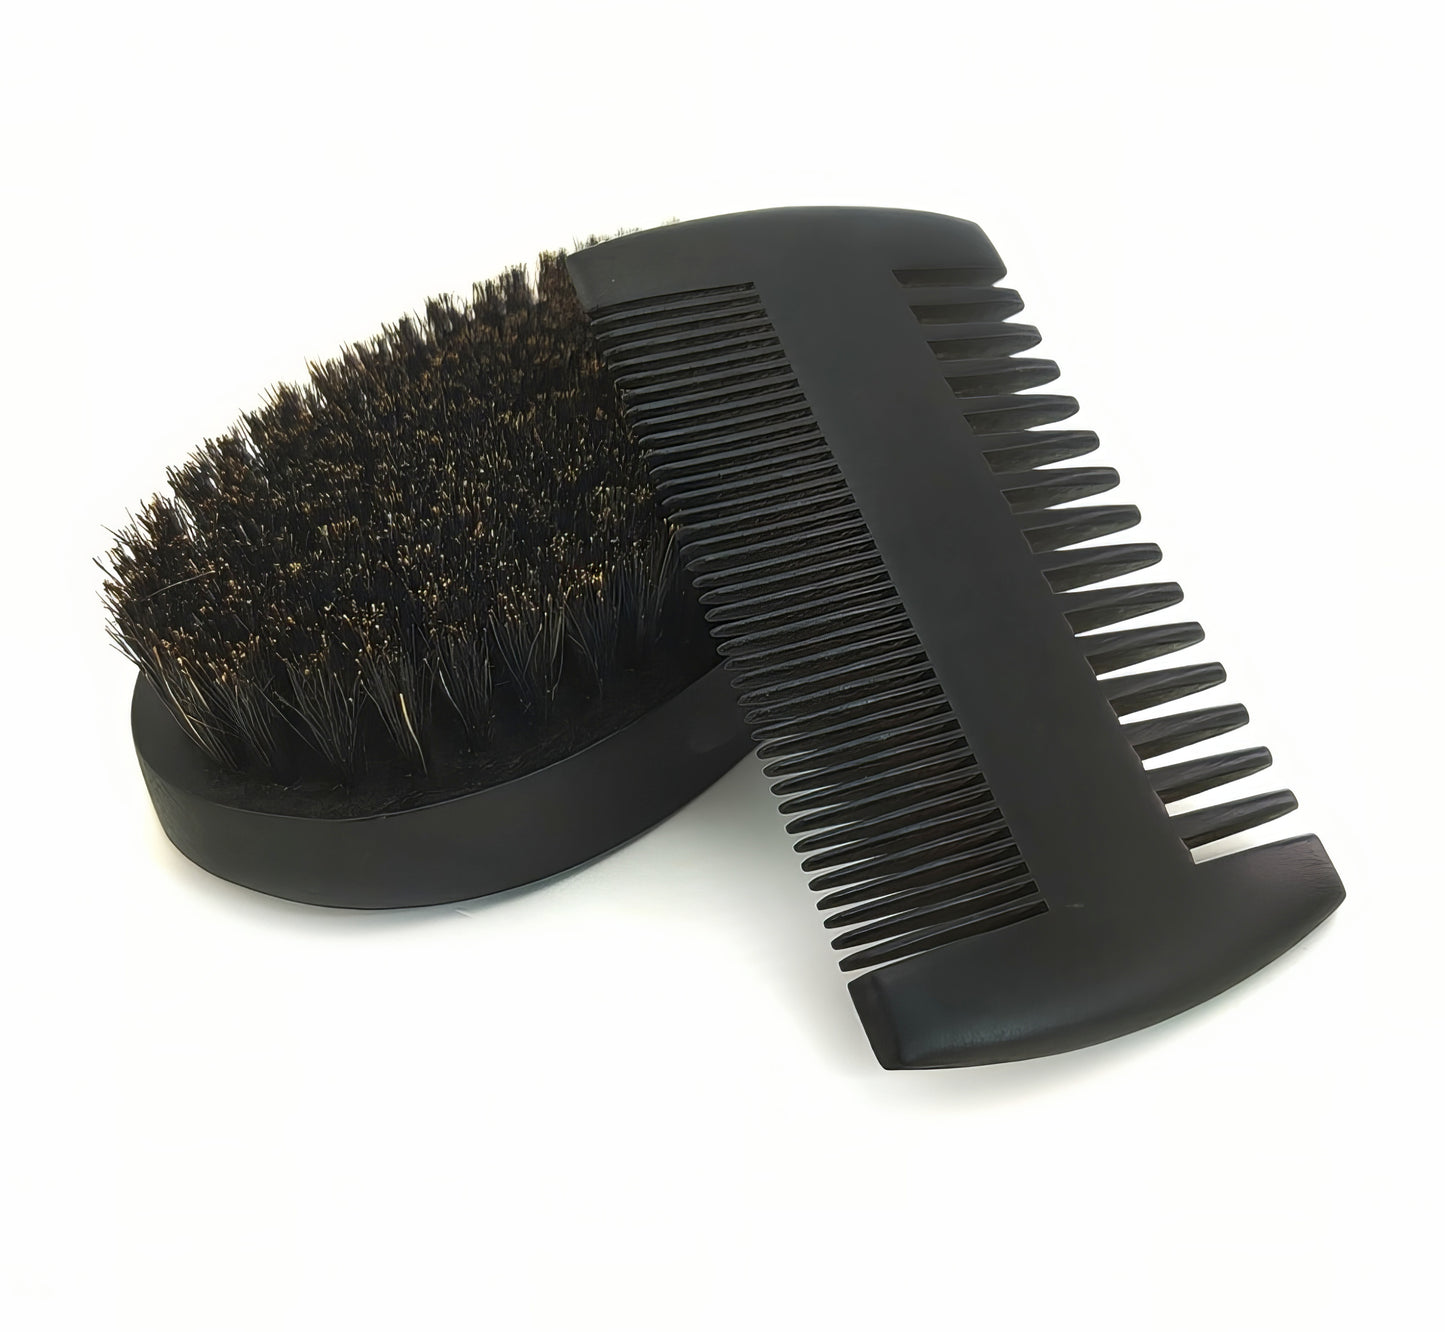 Wood Beard Brush Double-Sided Styling Comb Set